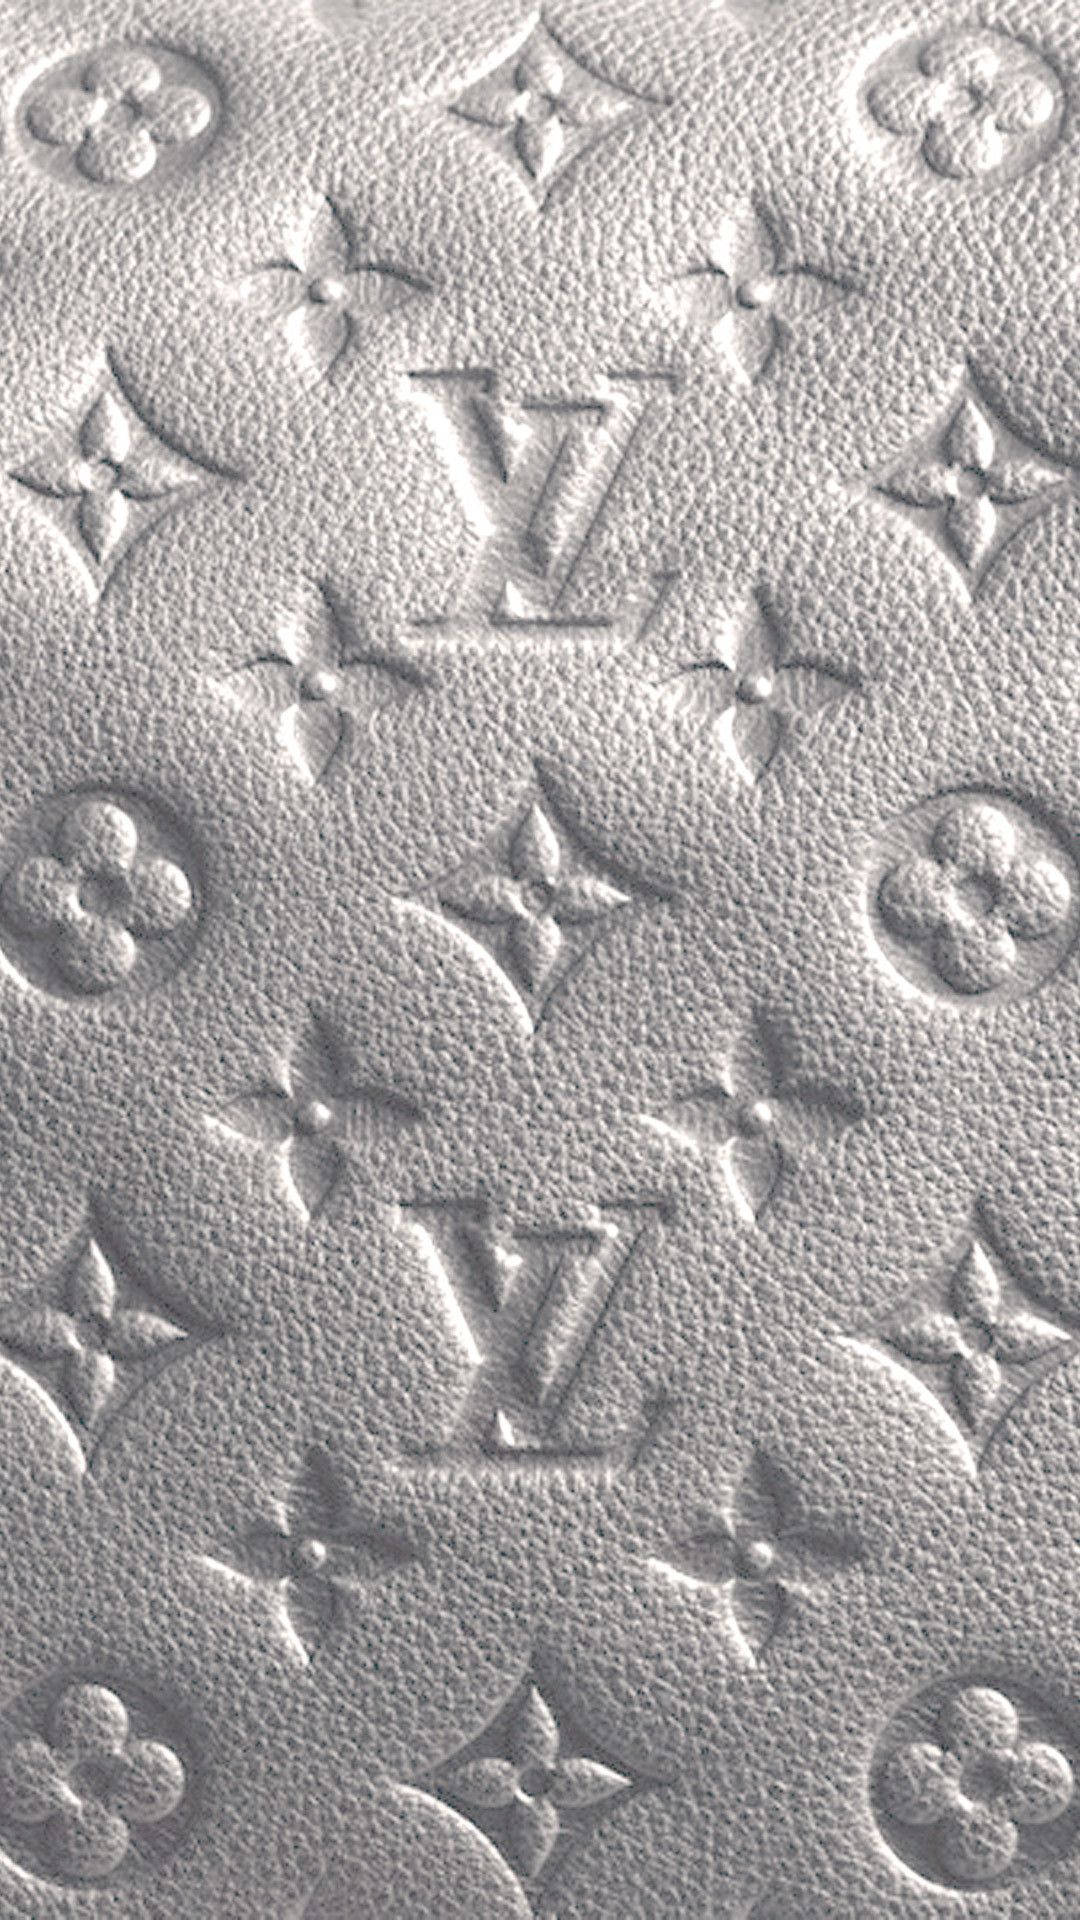 Download Luxury Meets Technology - Louis Vuitton iPhone Wallpaper